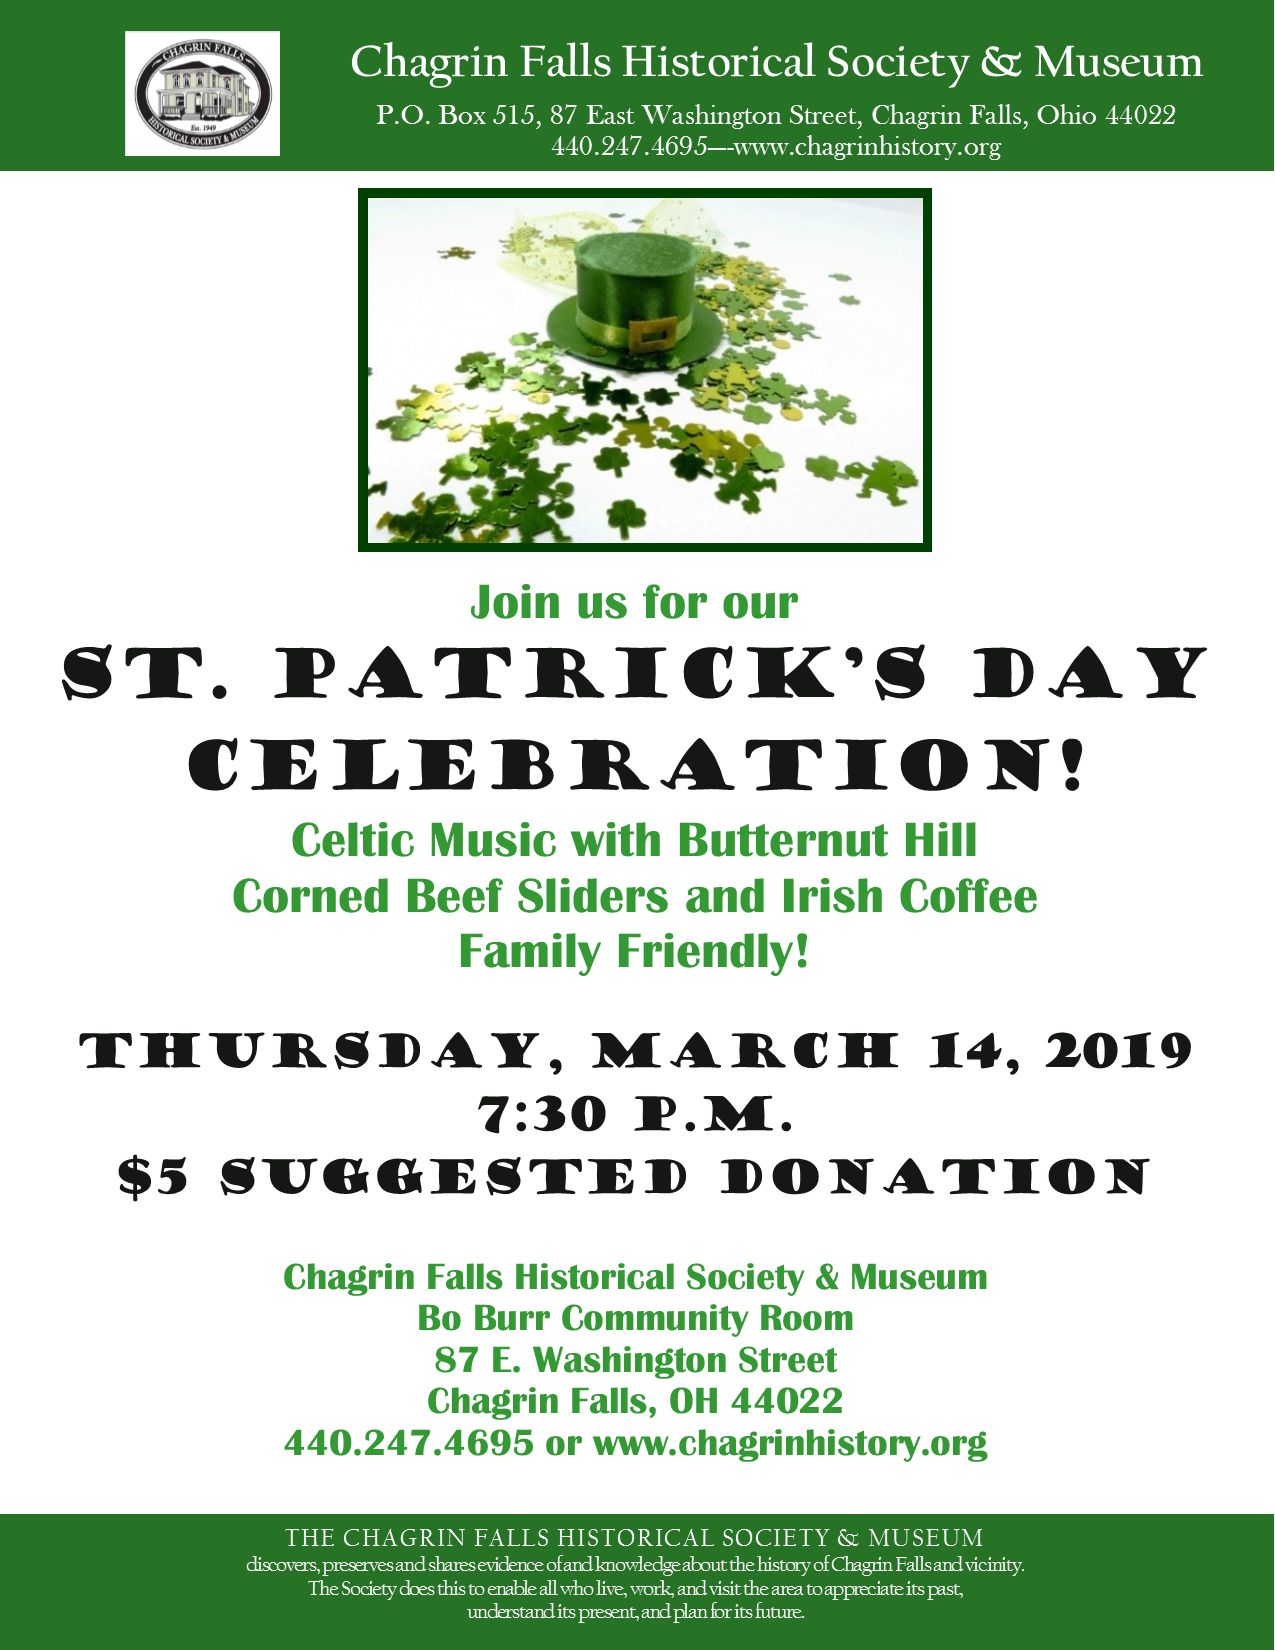 St. Patrick’s Day Celebration Chagrin Falls Historical Society